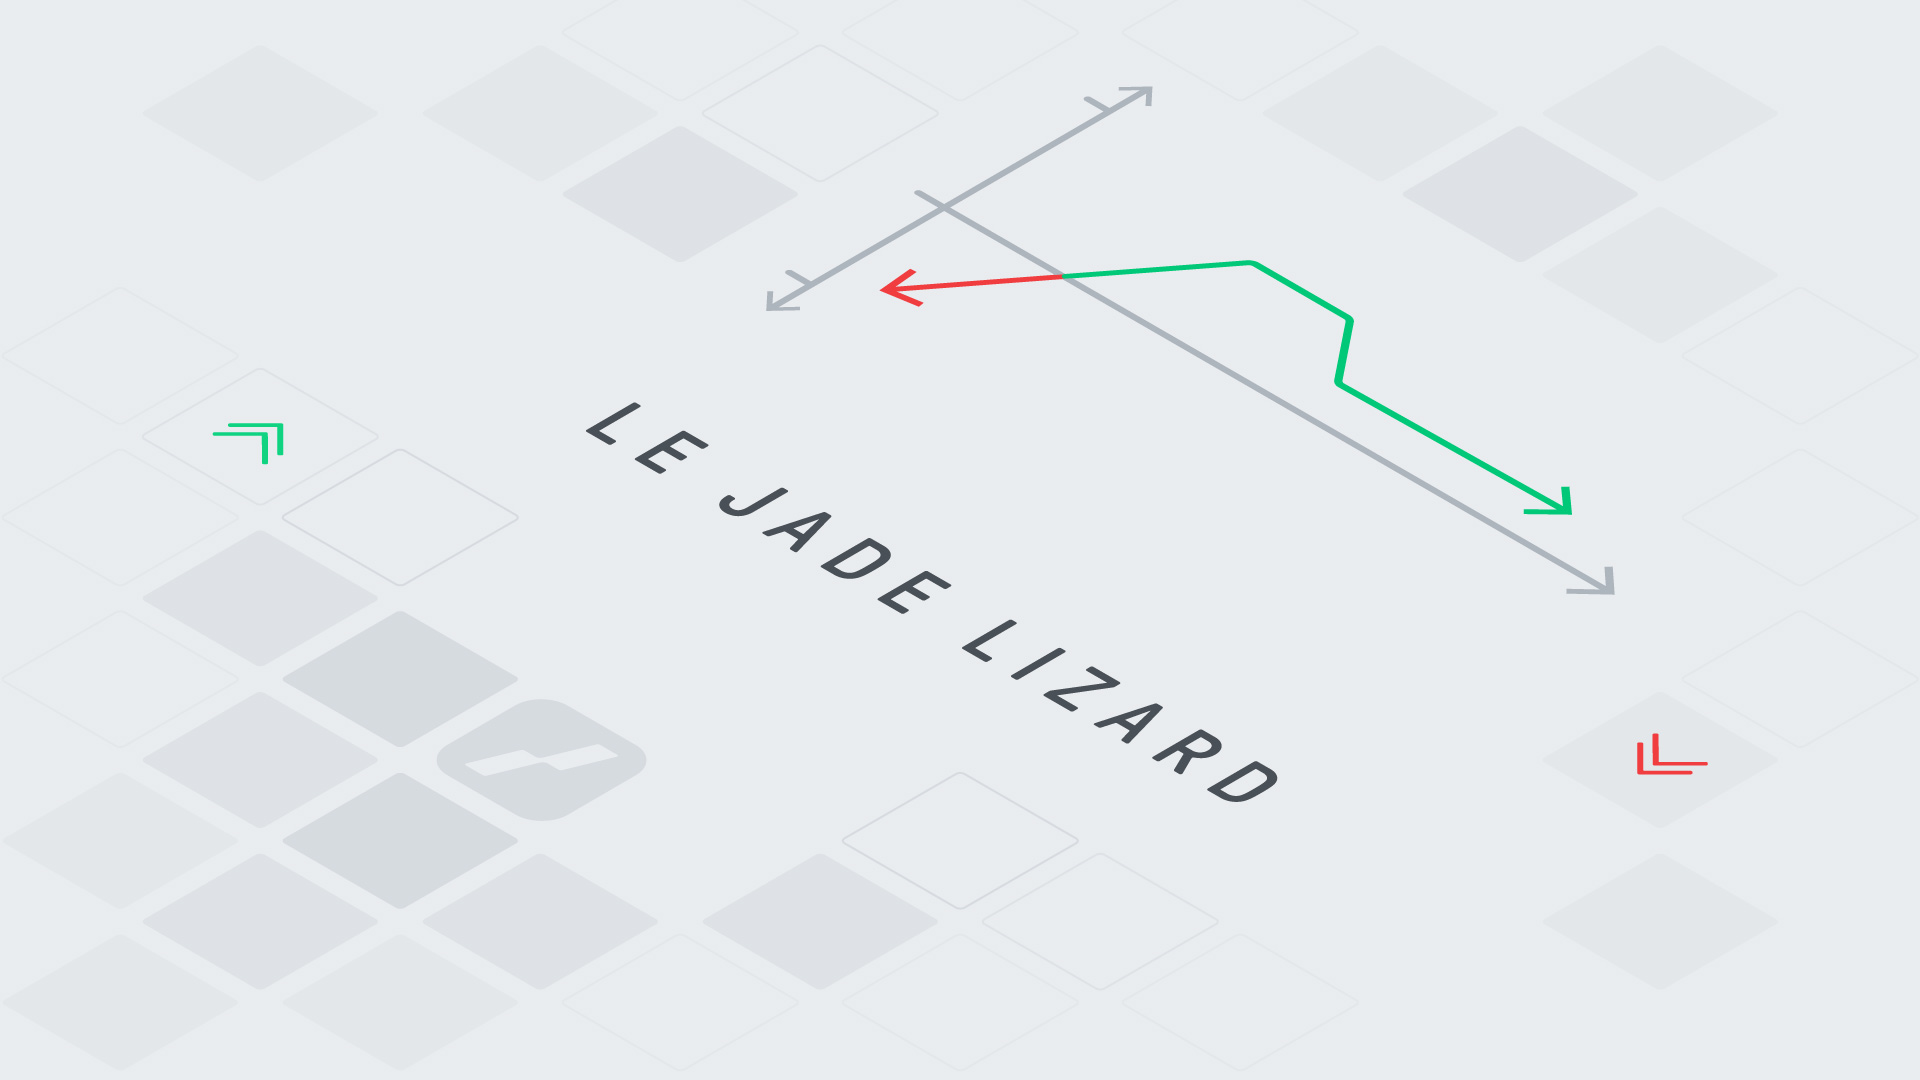 Jade Lizard - Jade lizard strategy - featured image